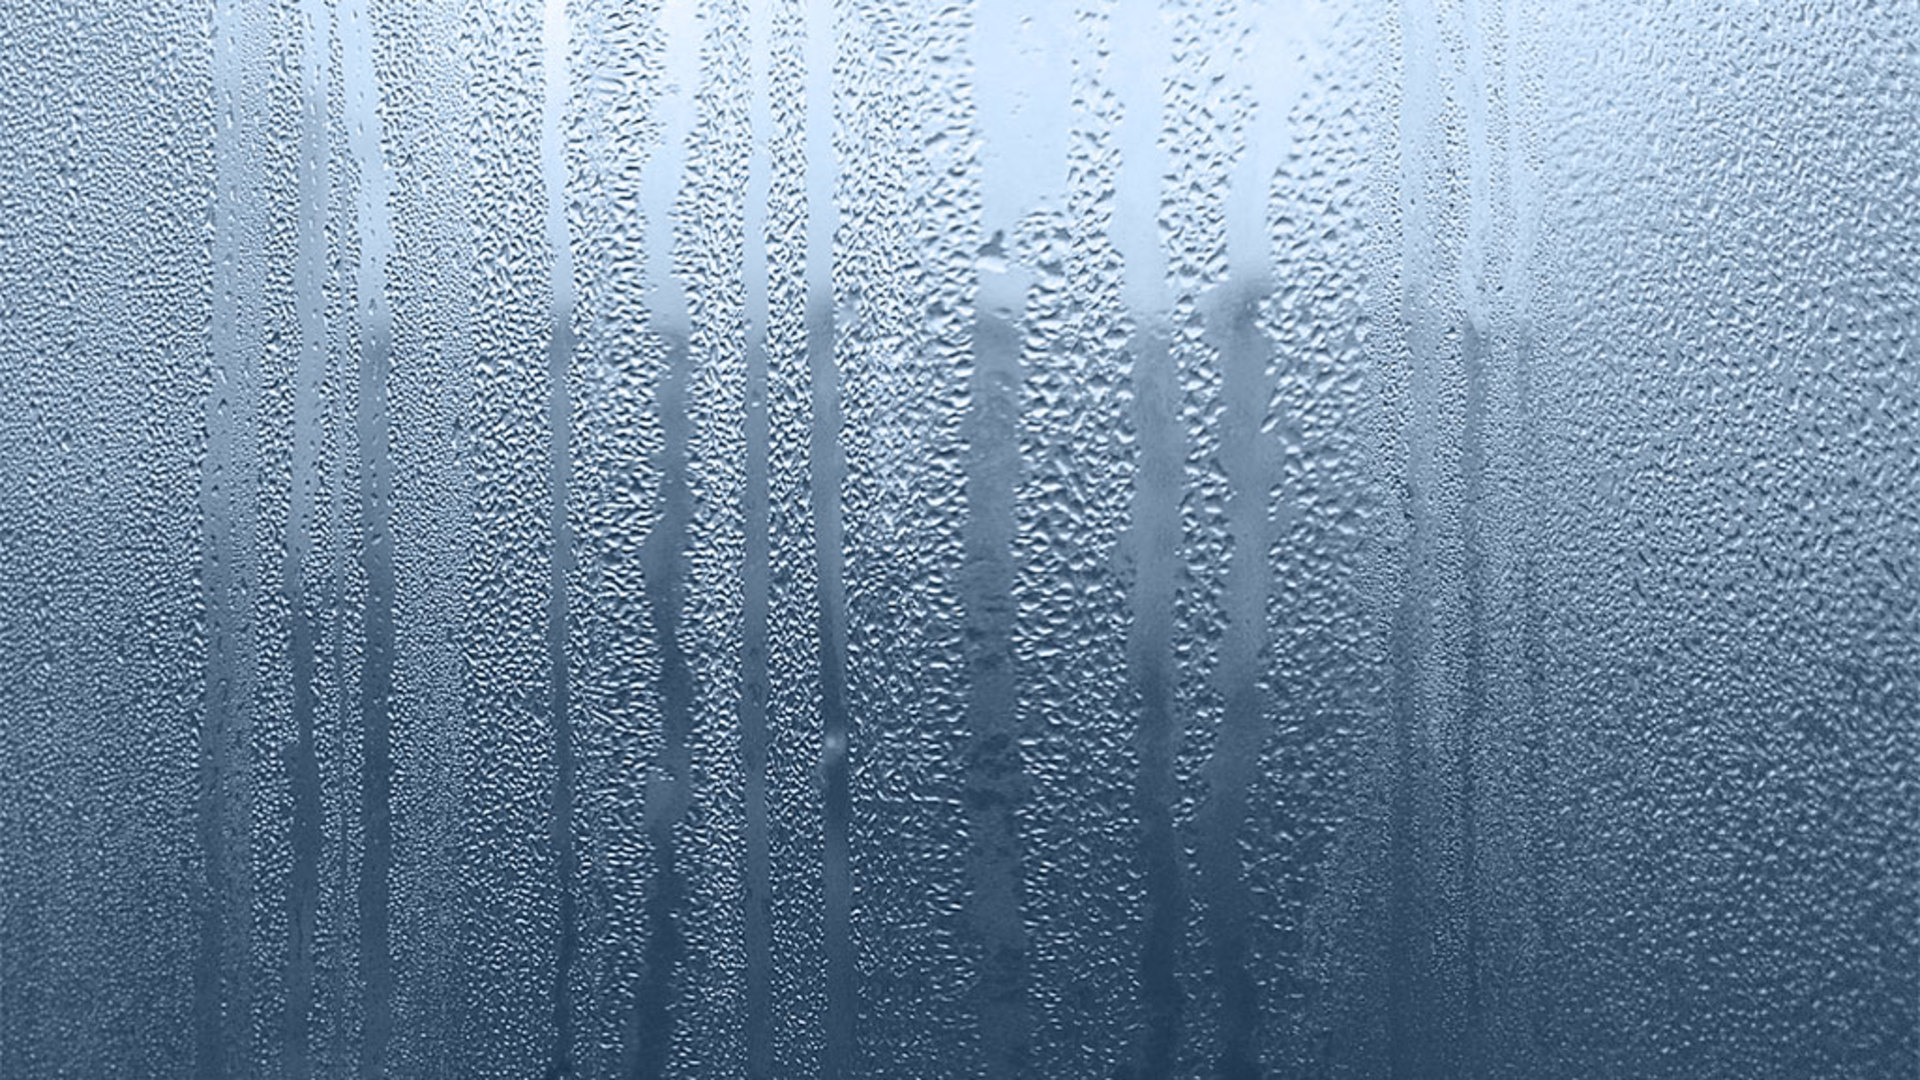 rain-condensation-raindrops-glass-hd-wallpaper.jpg